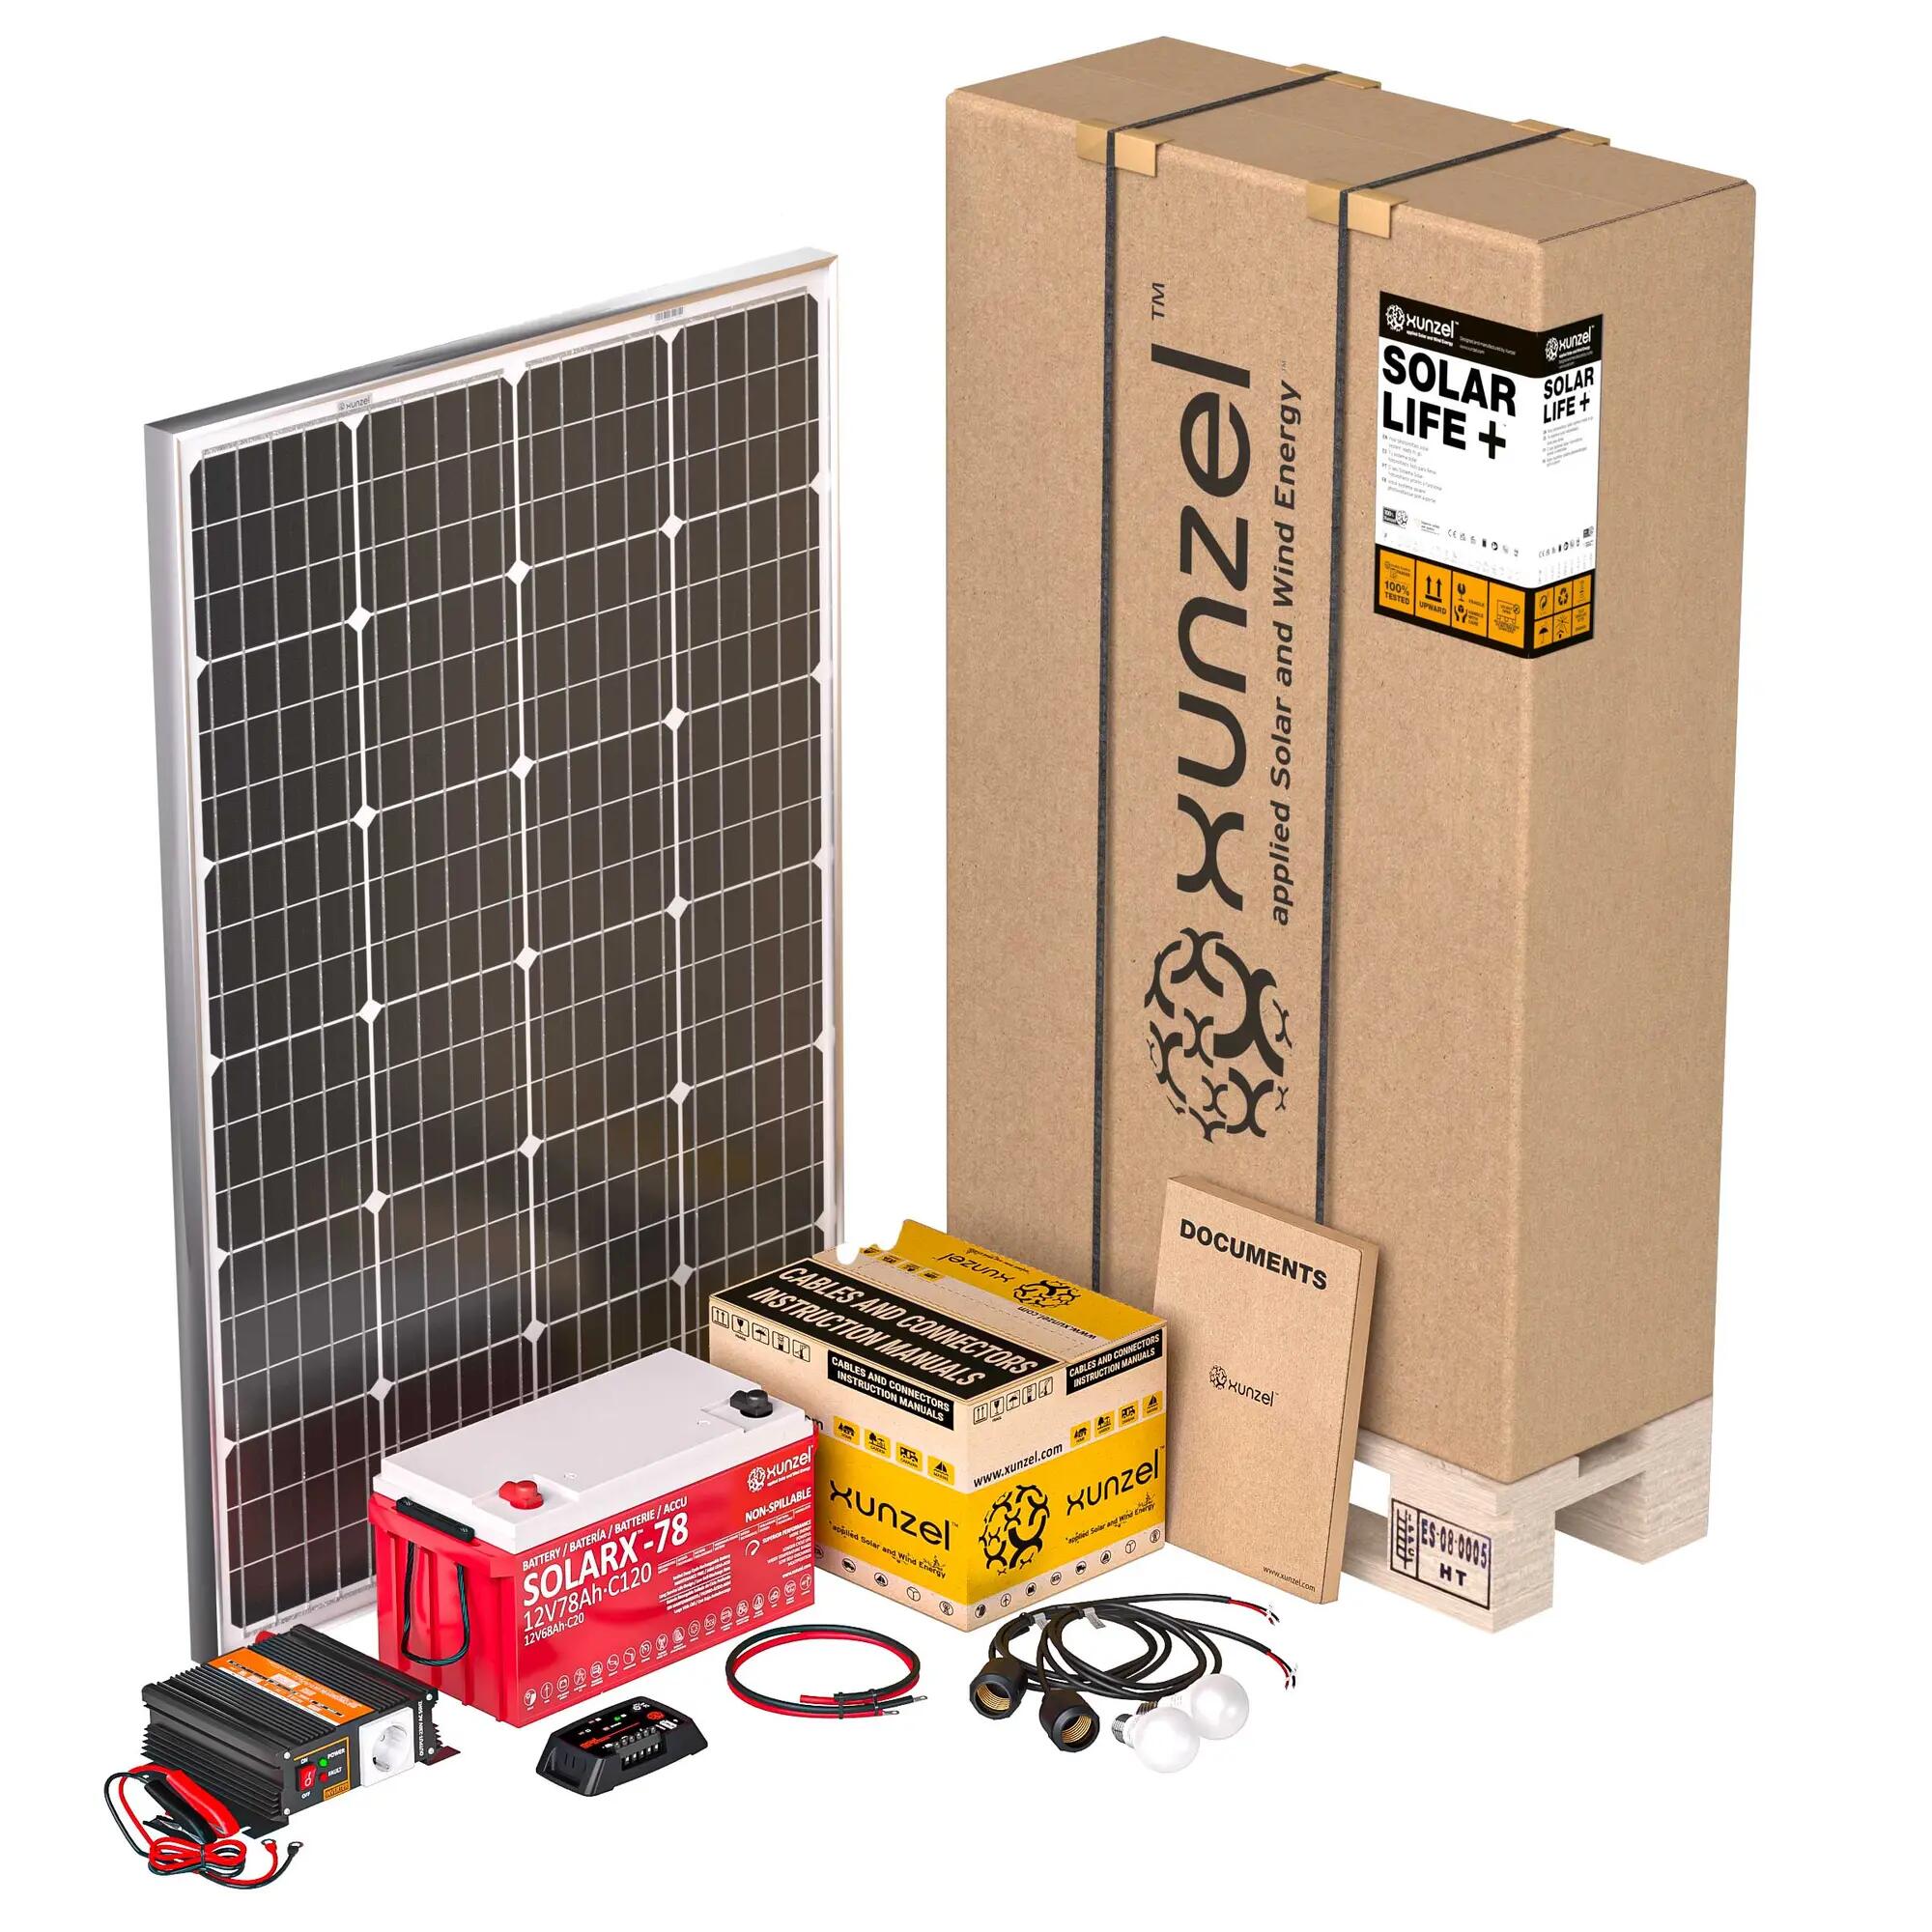 Kit fotovoltaico solarlife+ xunzel 500 iluminación led nature, inversor 500w